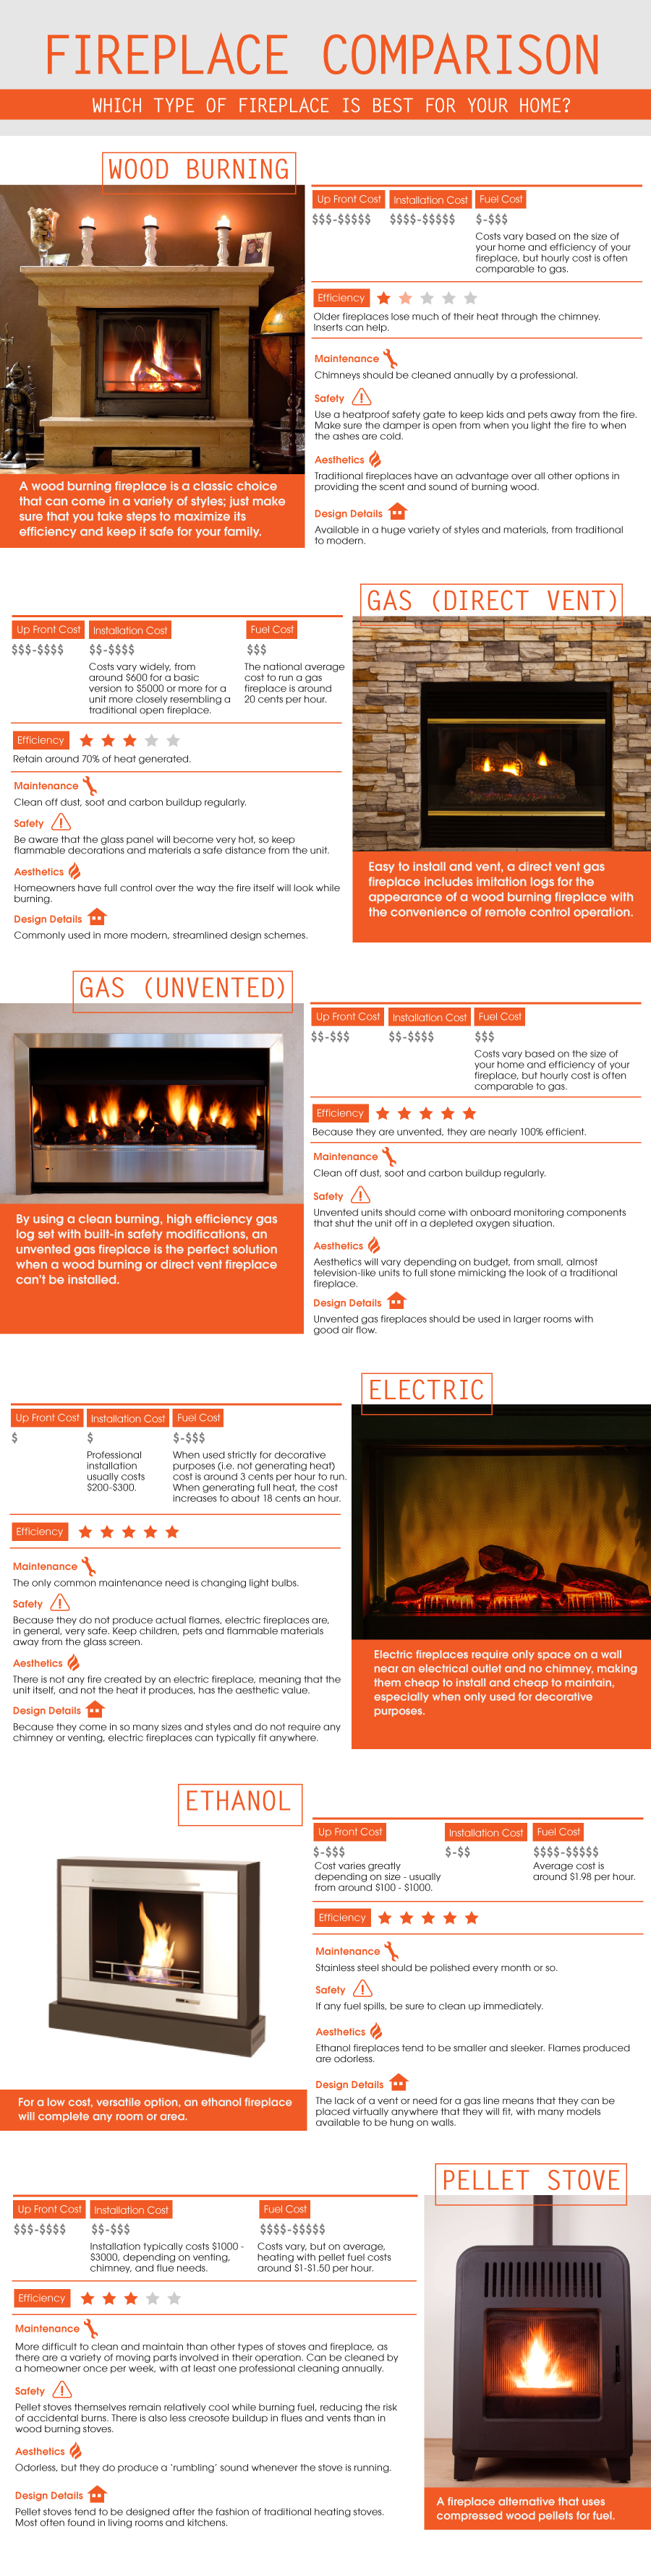 Fireplace Comparison Guide